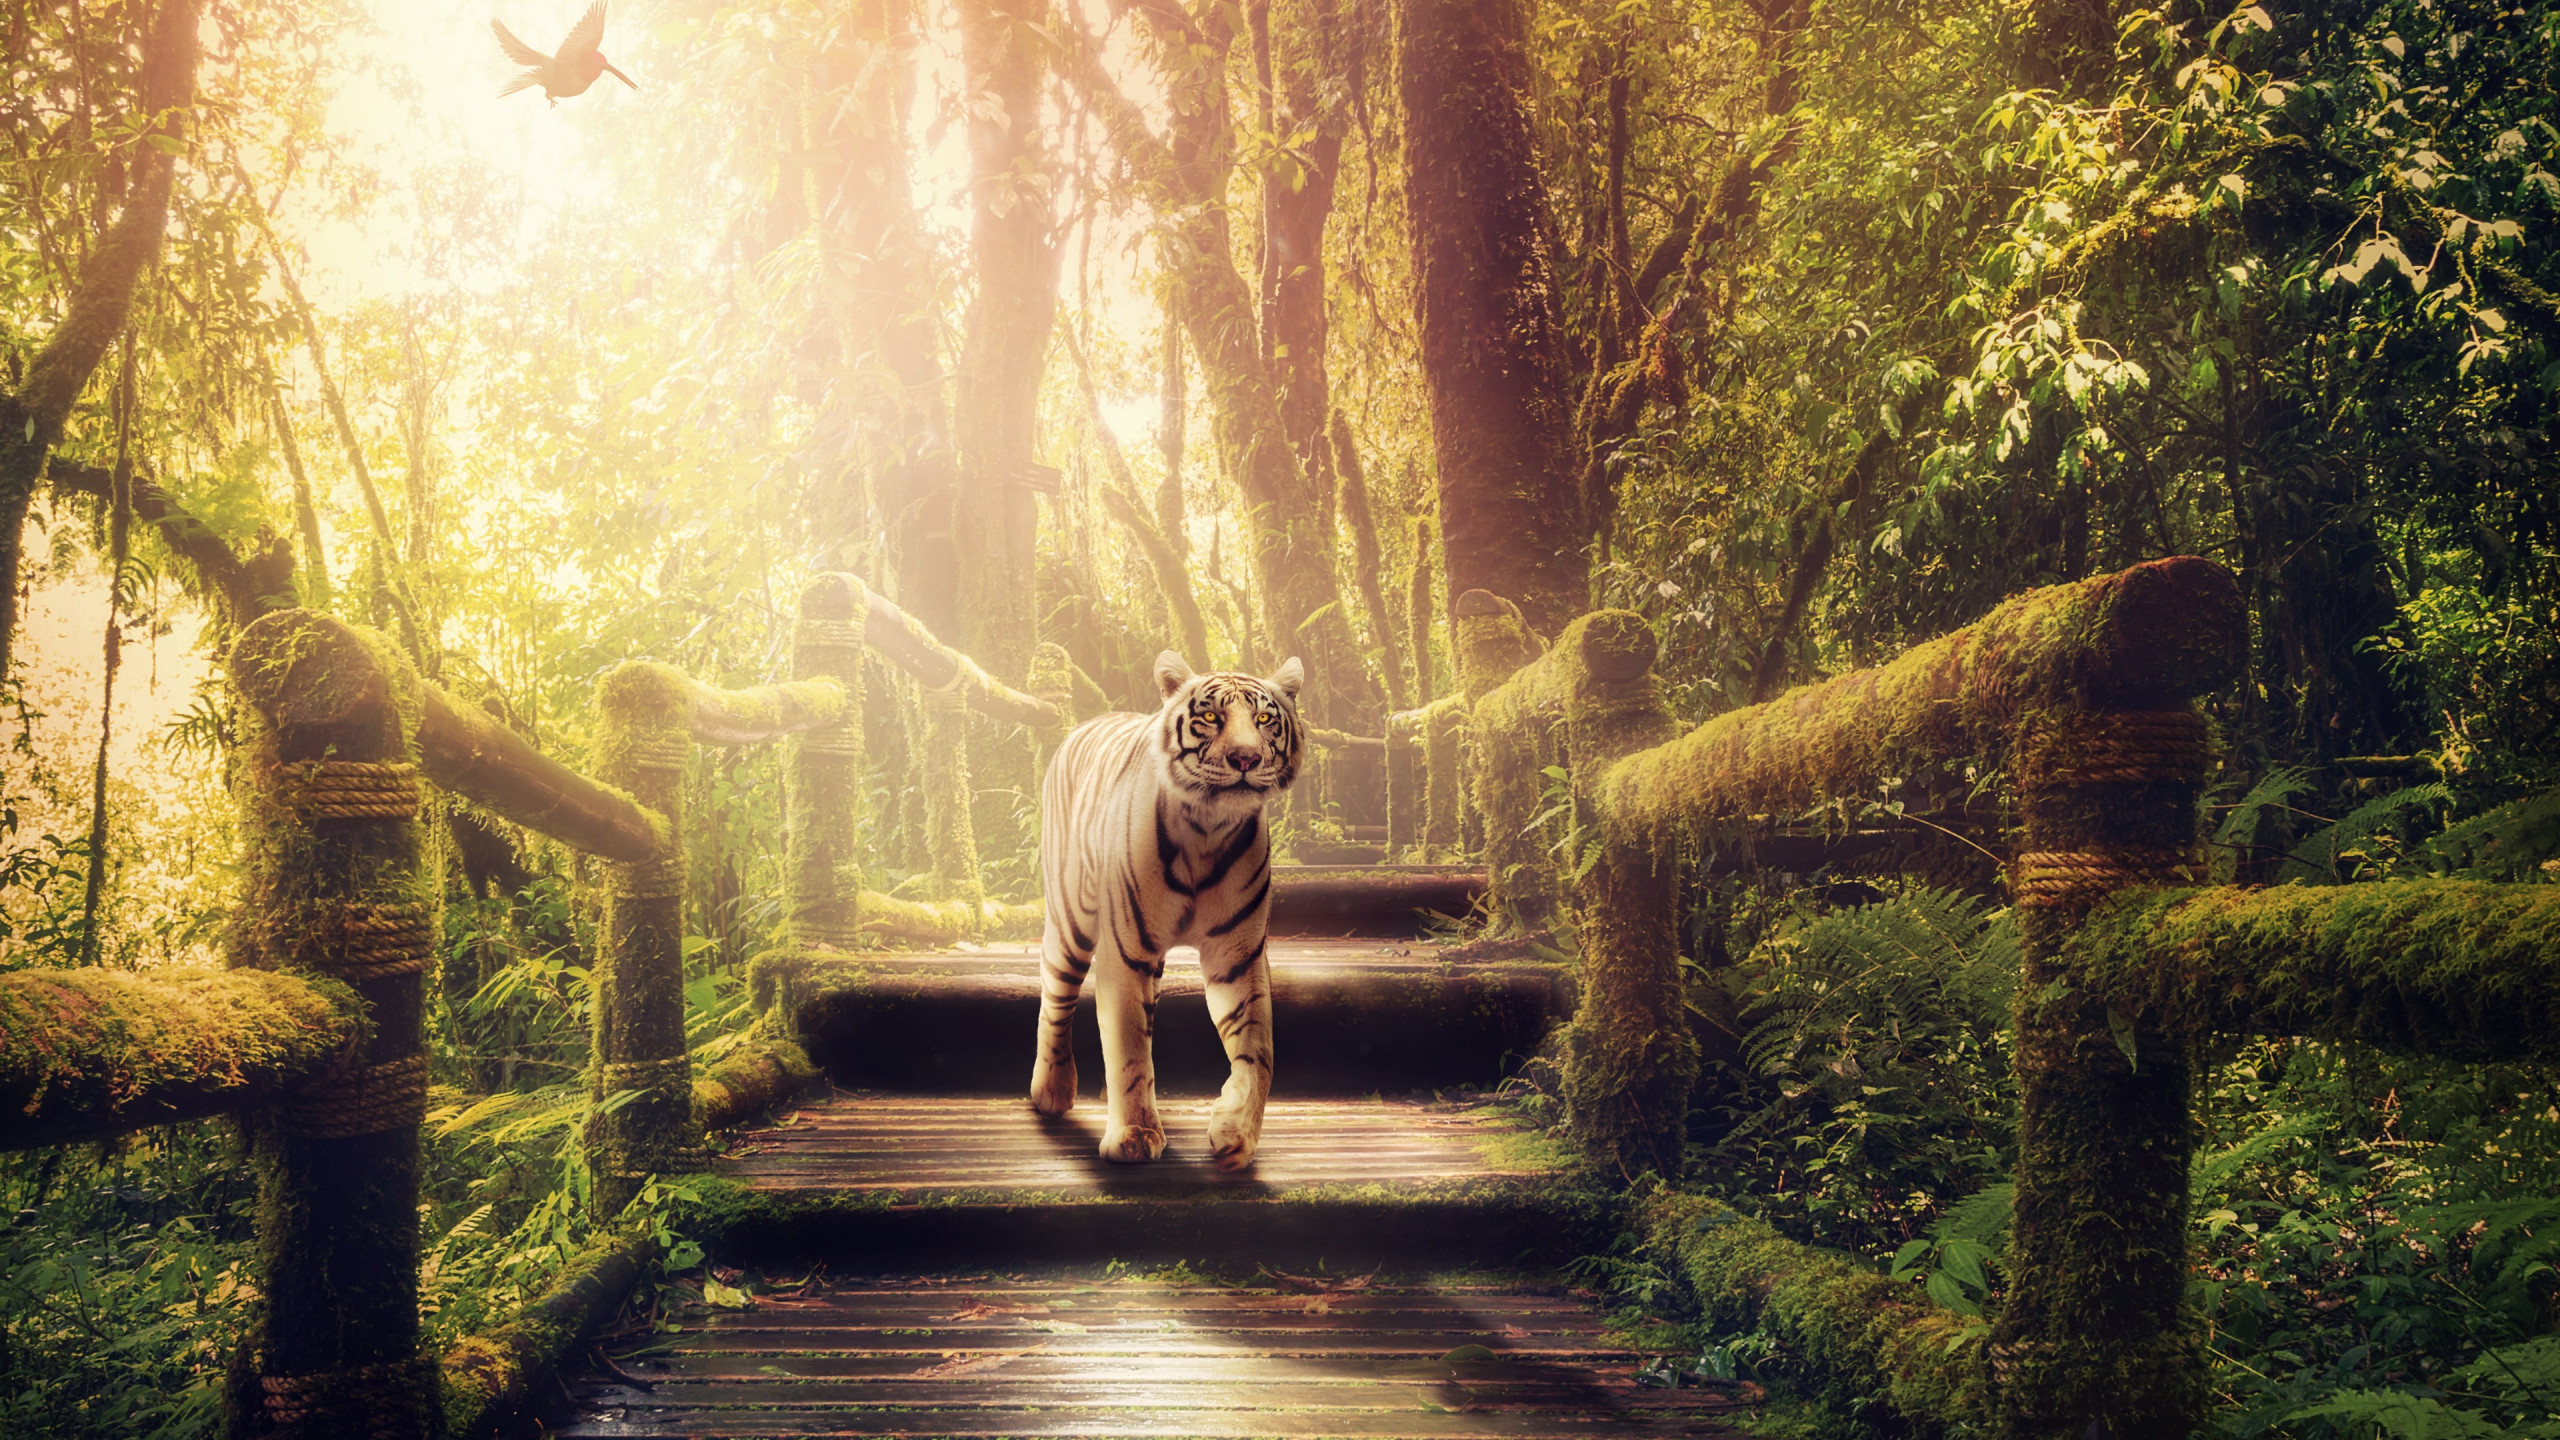 The tiger of jungle wallpaper 2560x1440